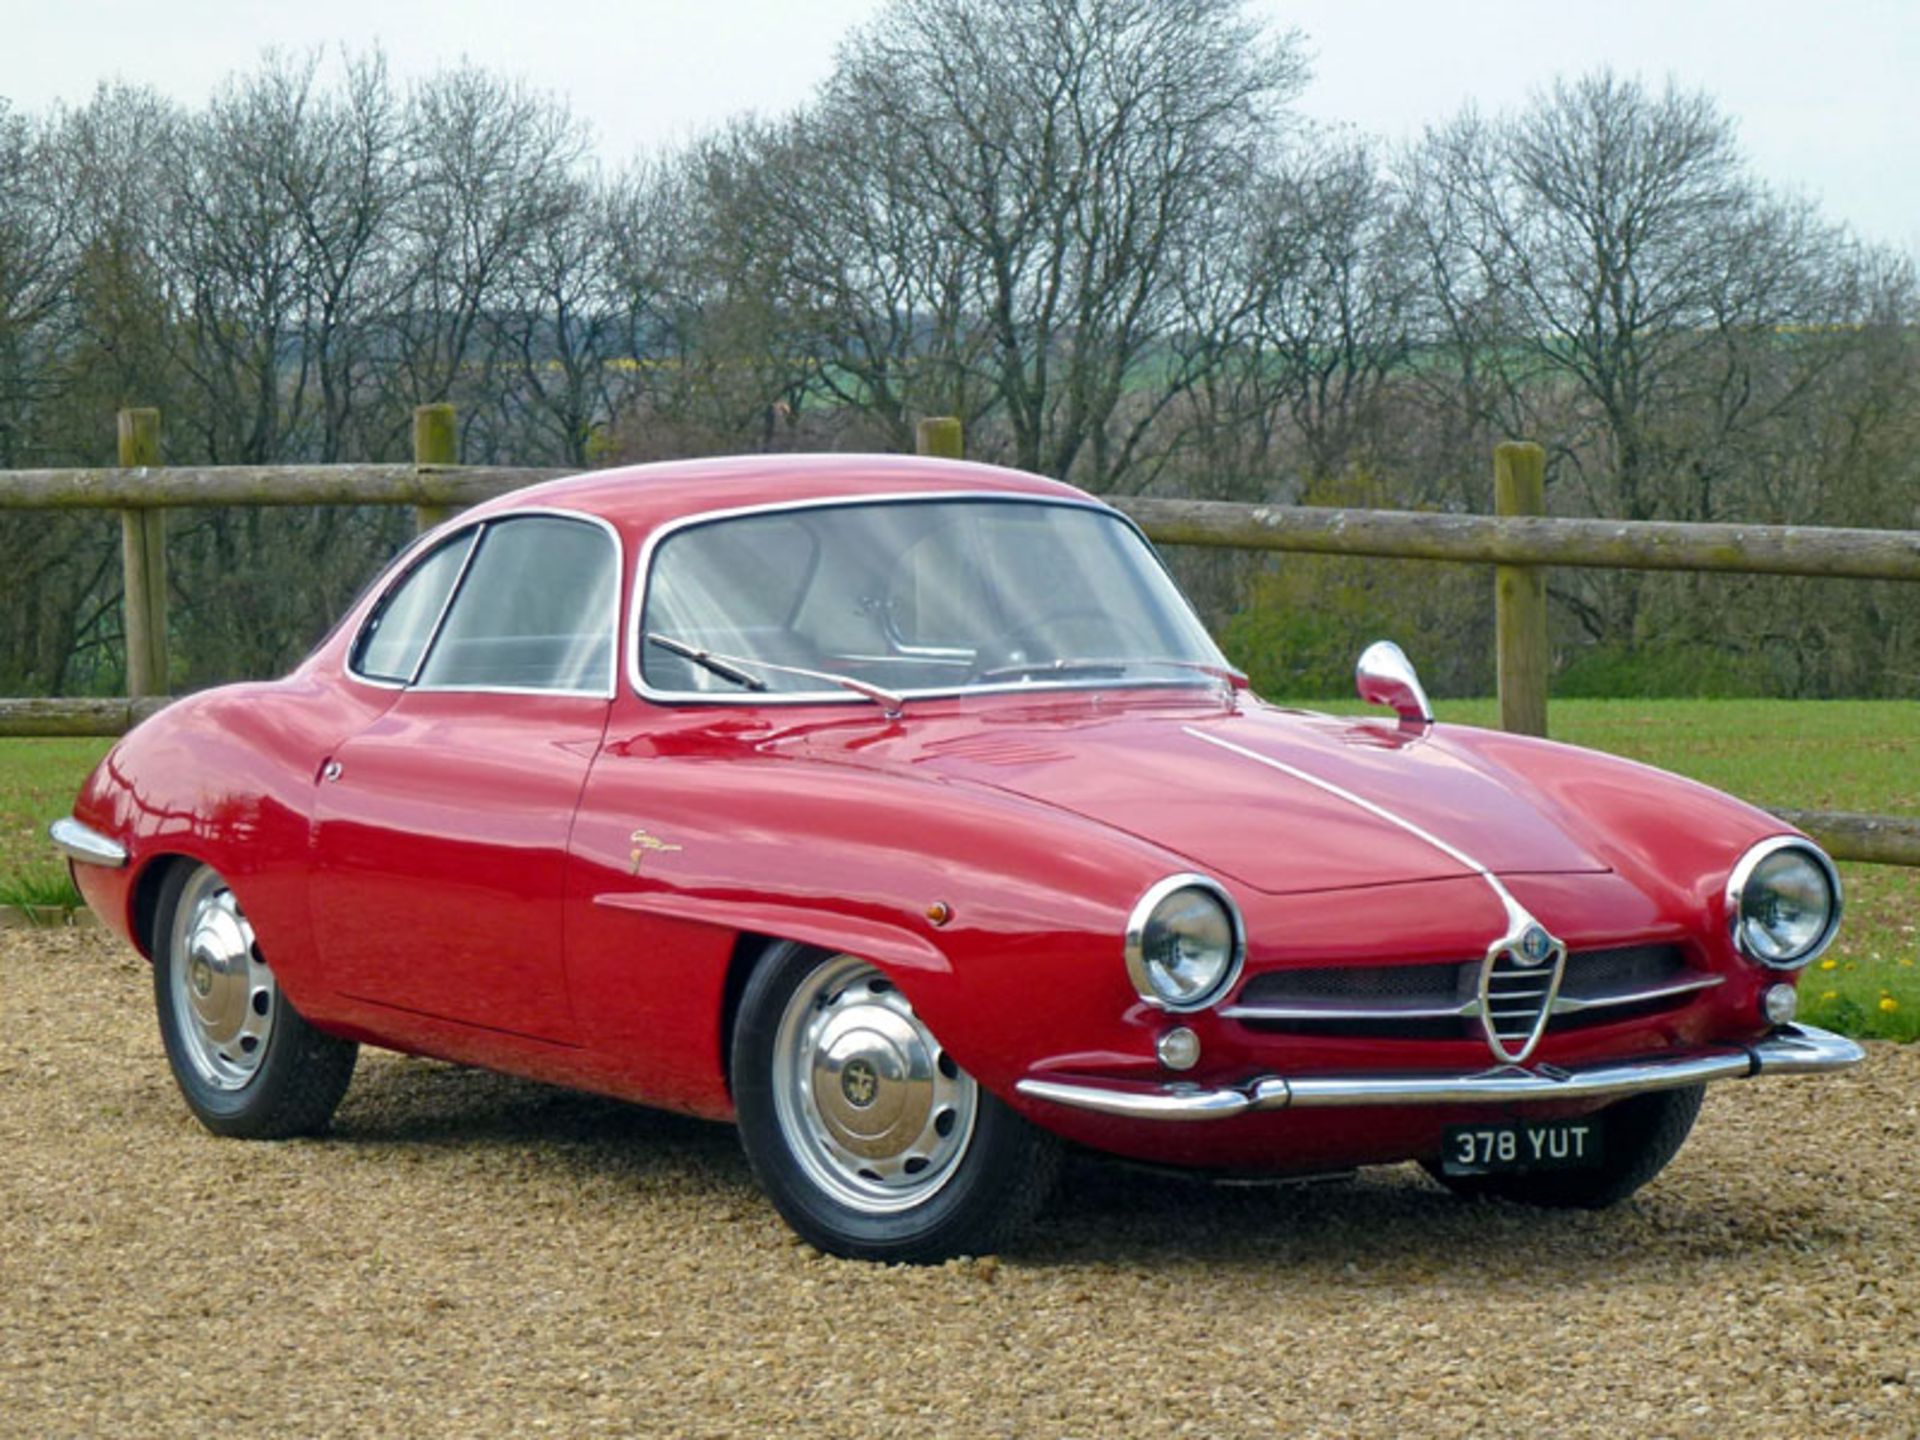 1961 Alfa Romeo Giulietta Sprint Speciale - Image 6 of 12